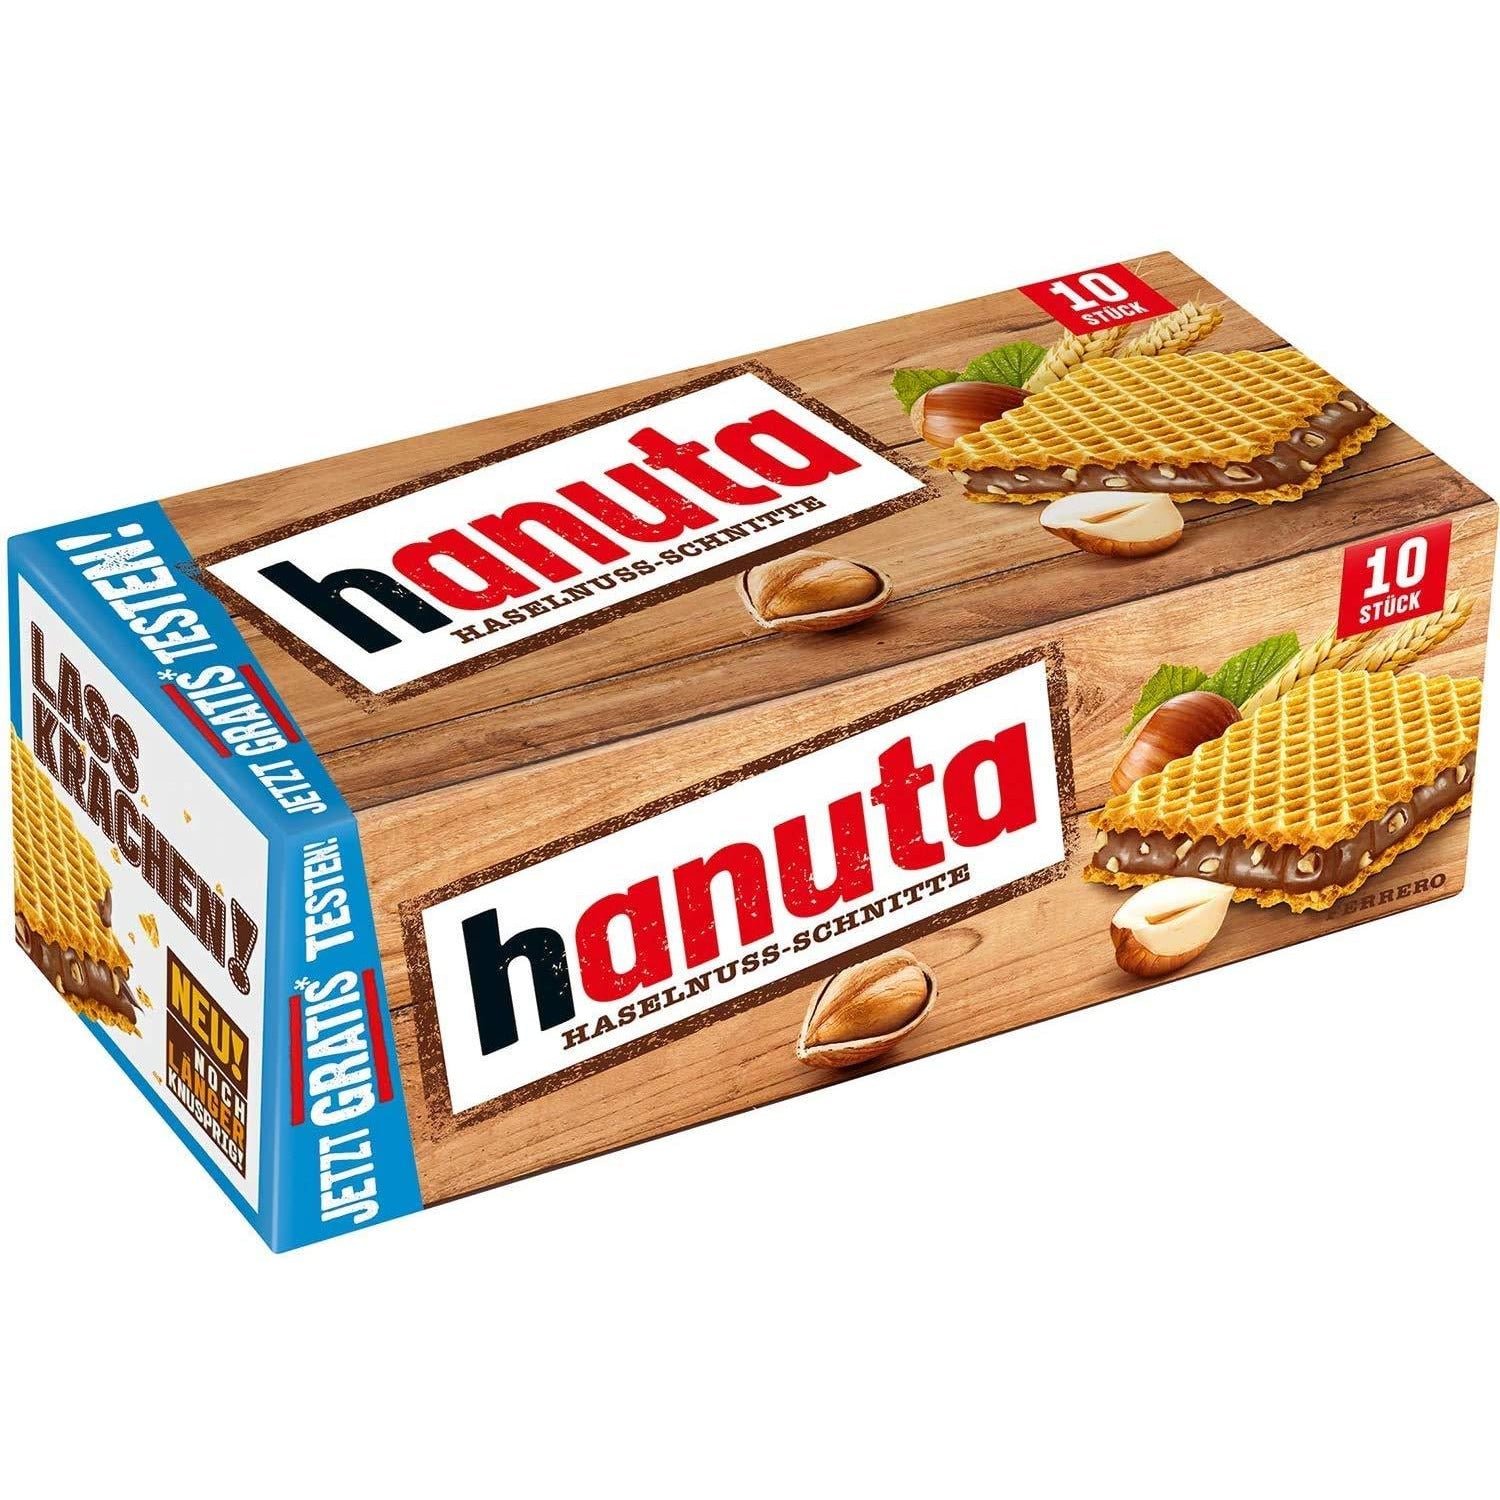 Ferrero Hanuta Wafers Filled with Hazelnut Cream (10 Pcs Box)